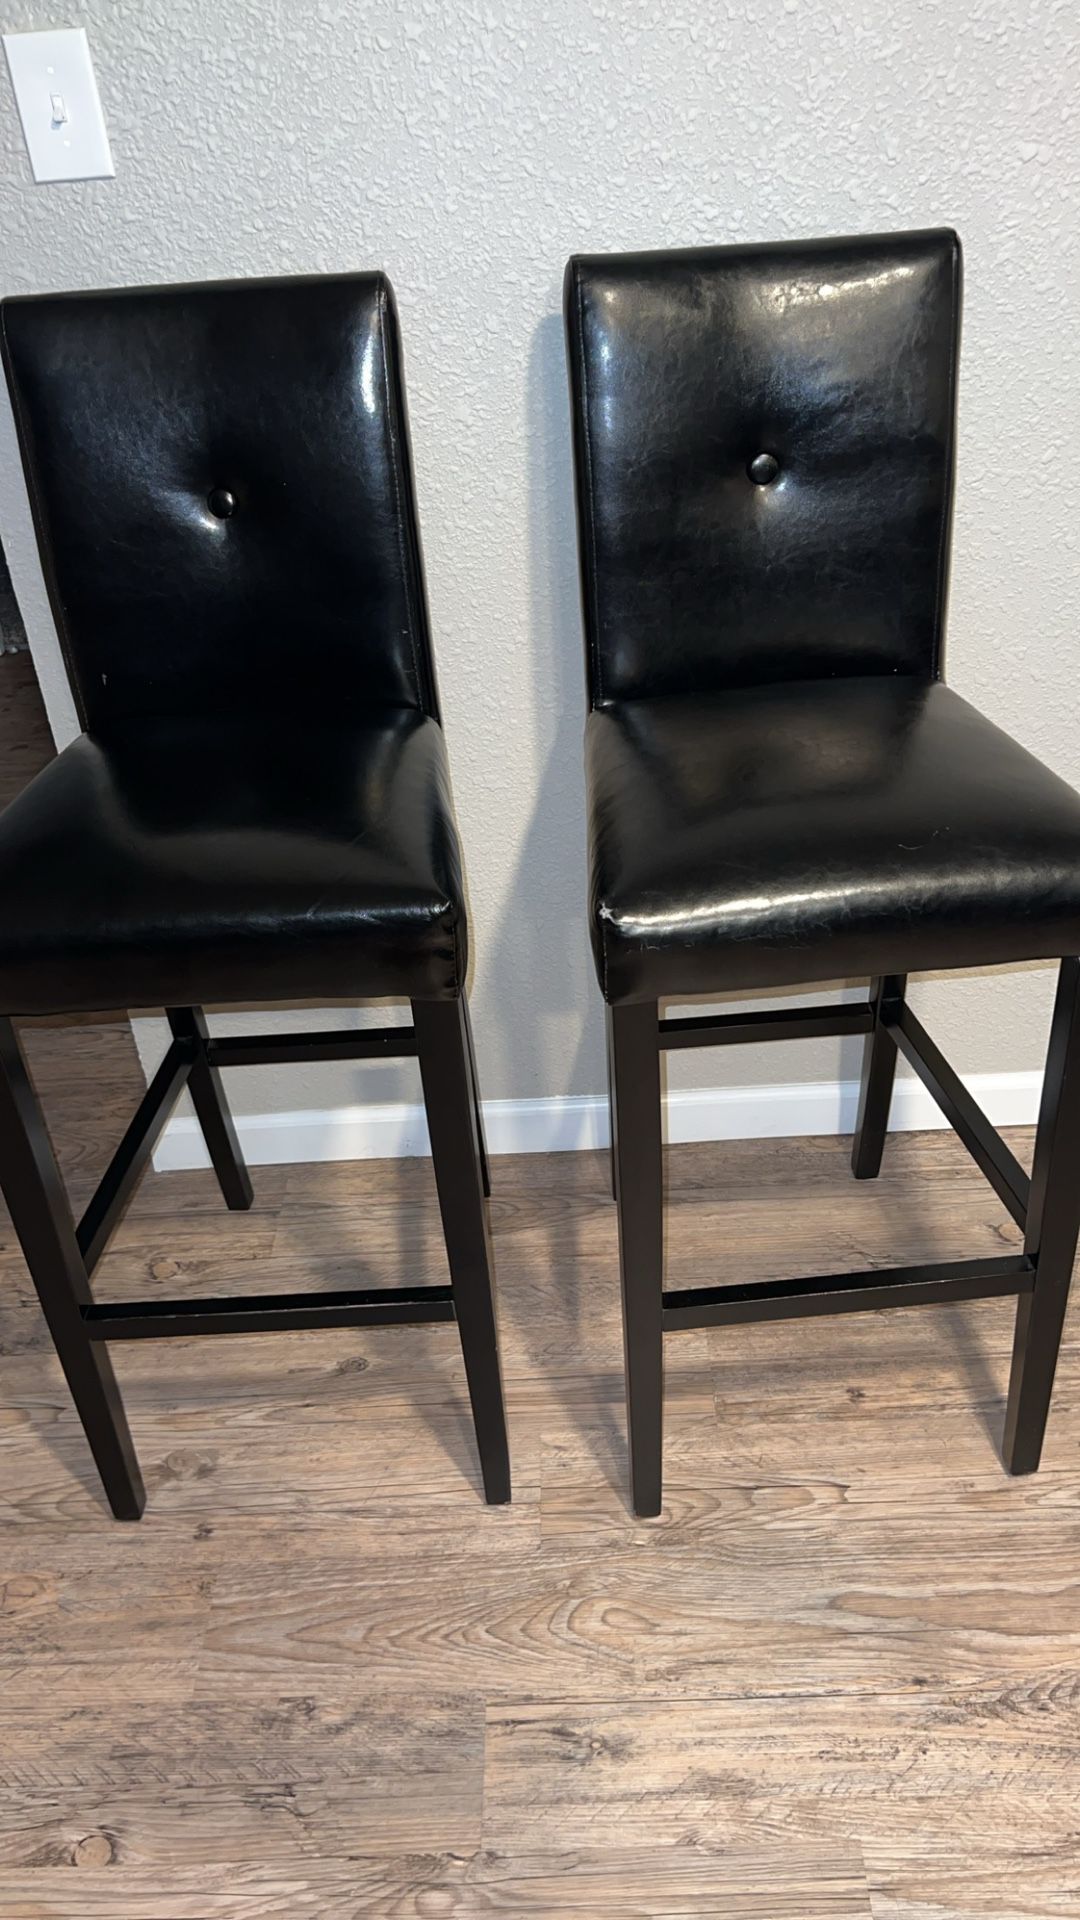 3 Tall Chairs / Bar Stools 